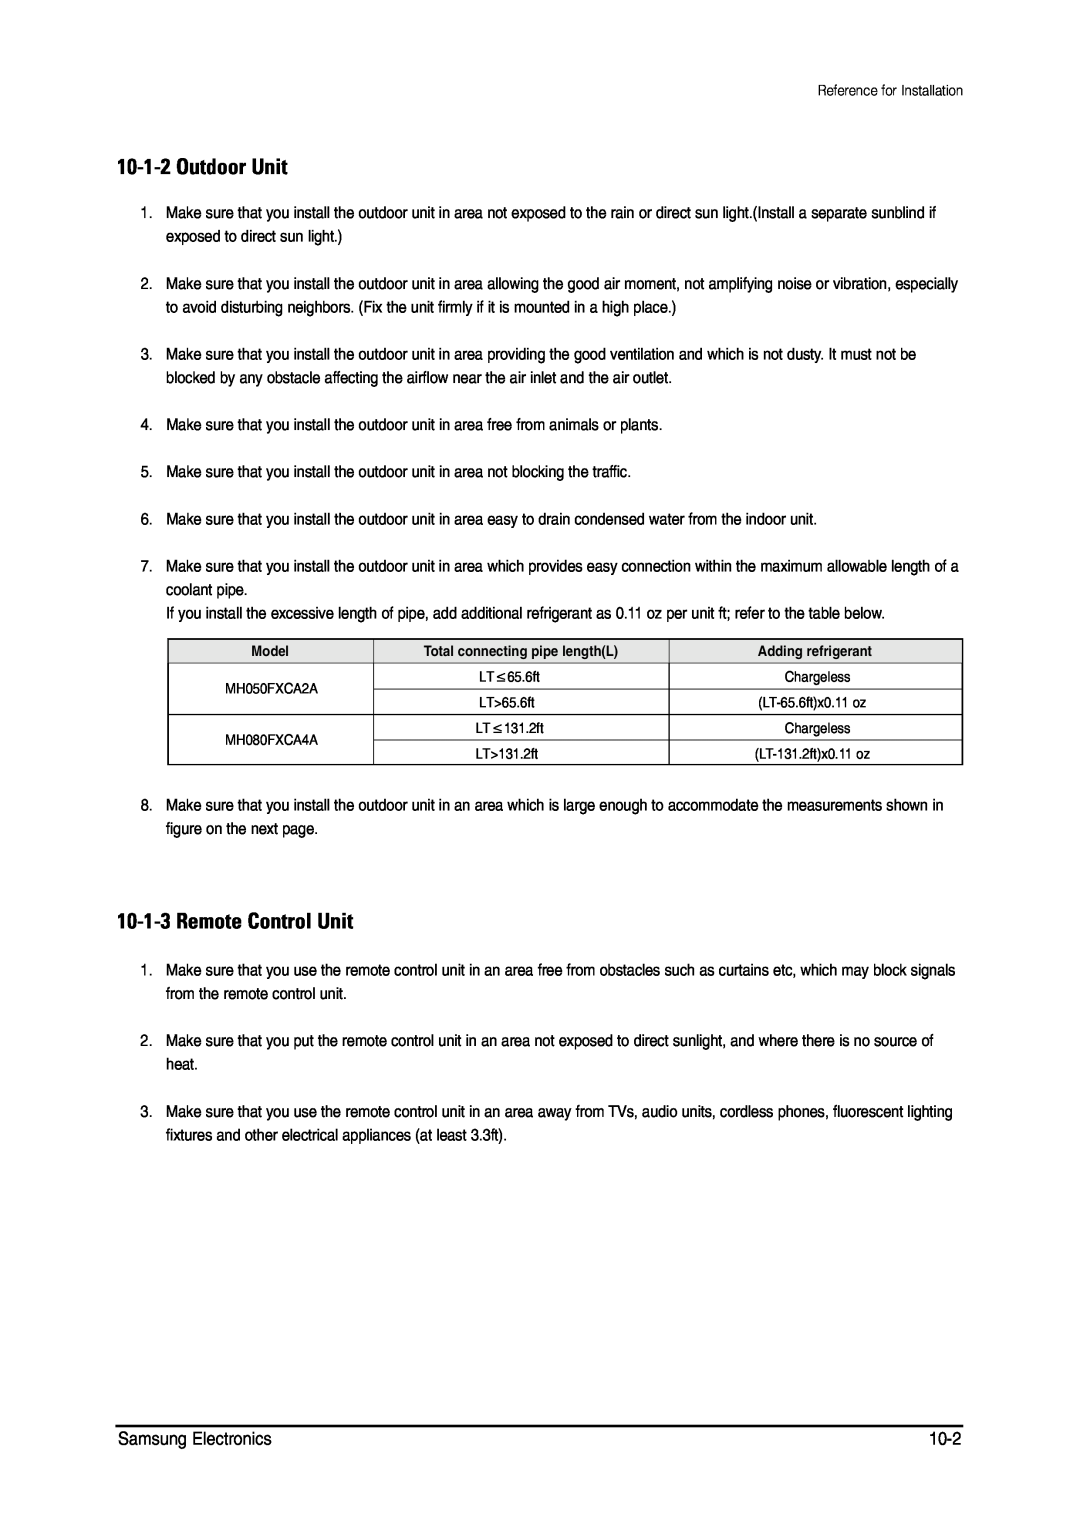 Samsung MH026FNCA service manual 10-1-2Outdoor Unit, 10-1-3Remote Control Unit, Samsung Electronics, 10-2 